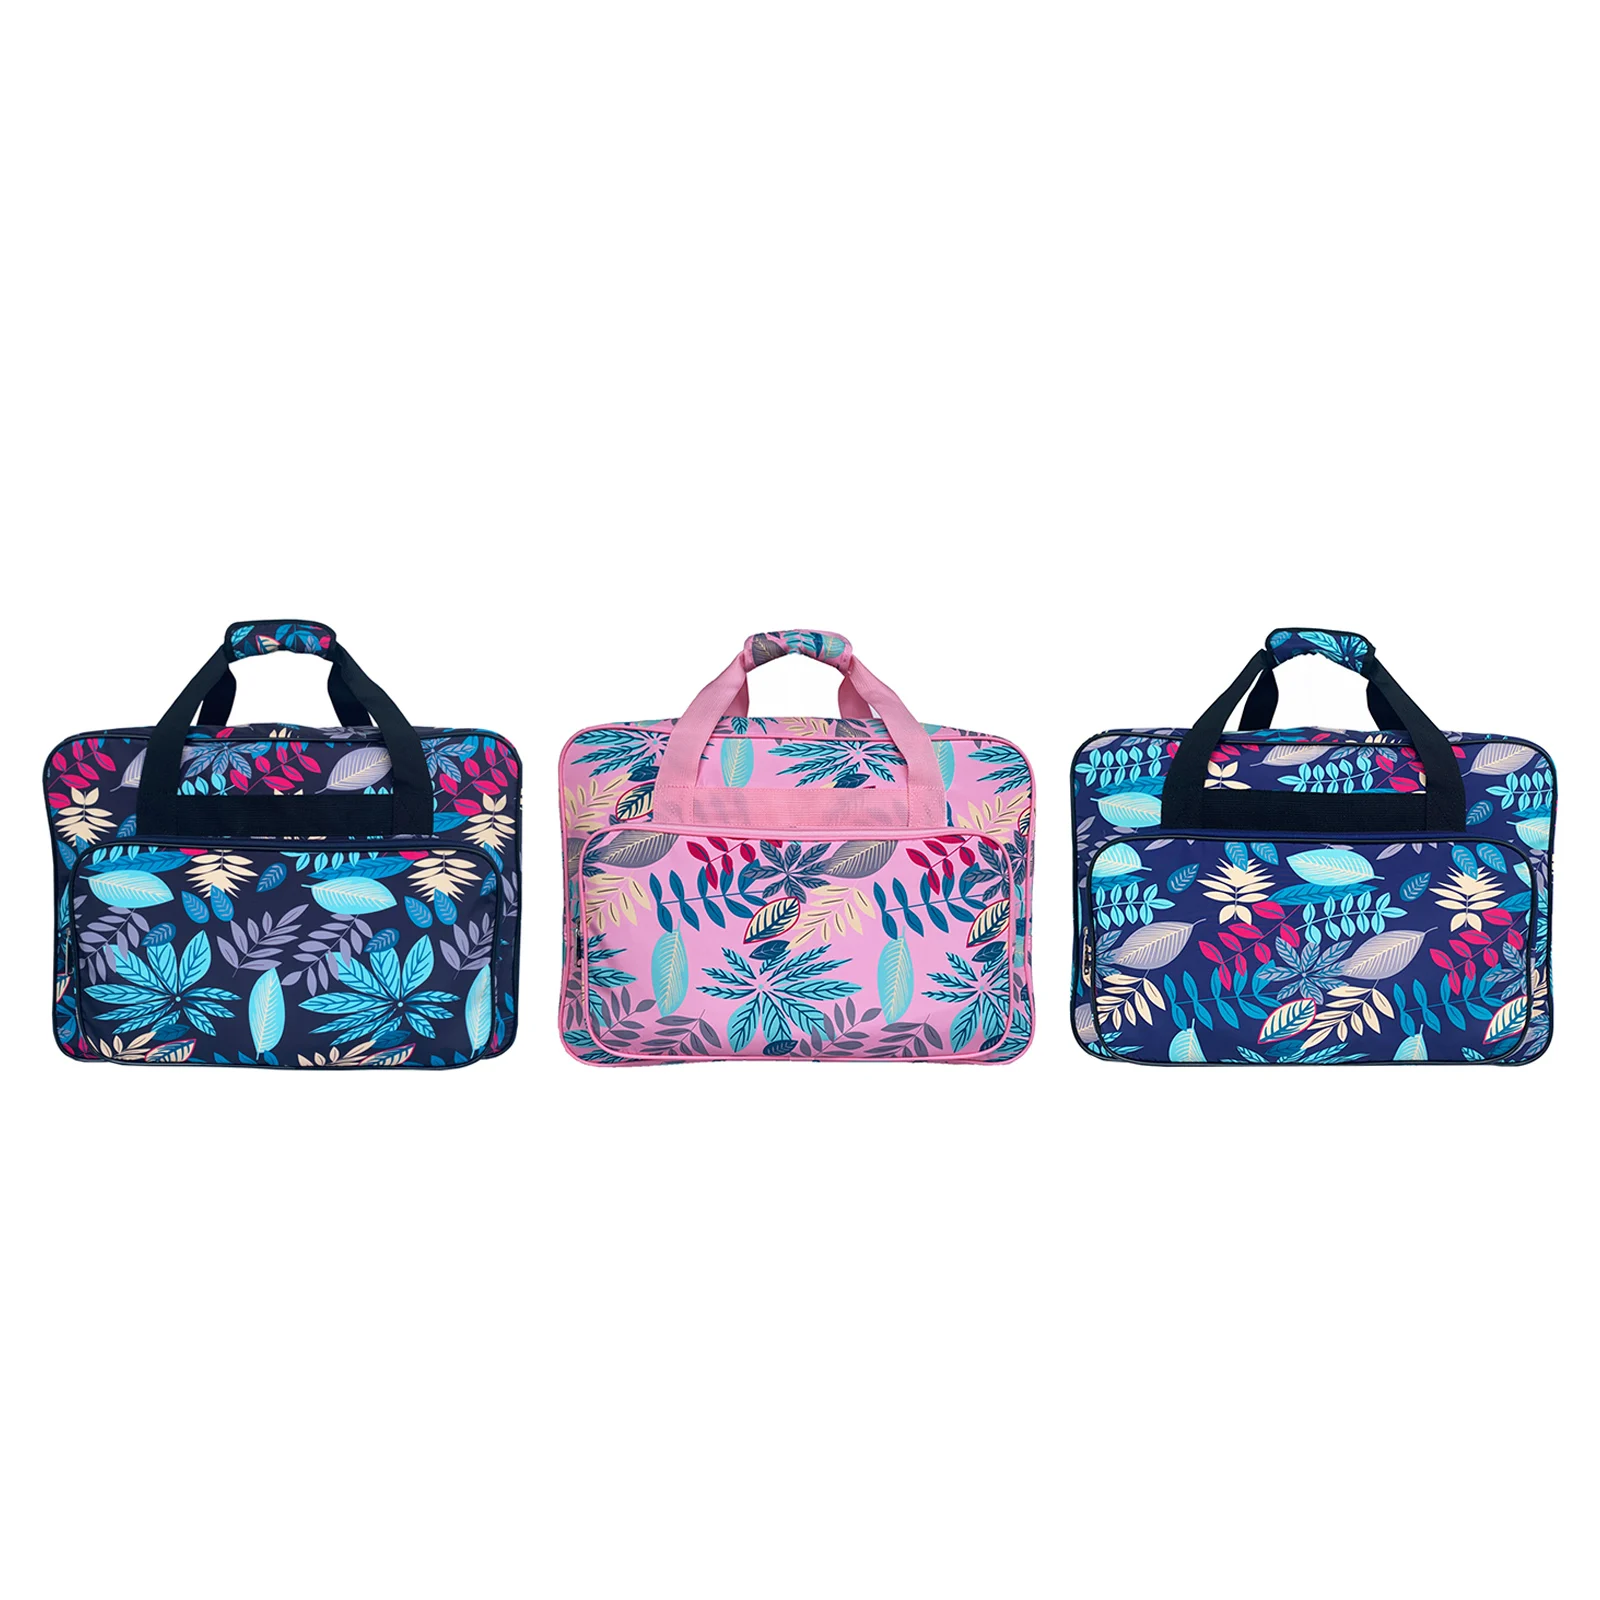 Sewing Machine Tote Bag Travel Carrying Case Cover Home Storage Nylon Handbag 